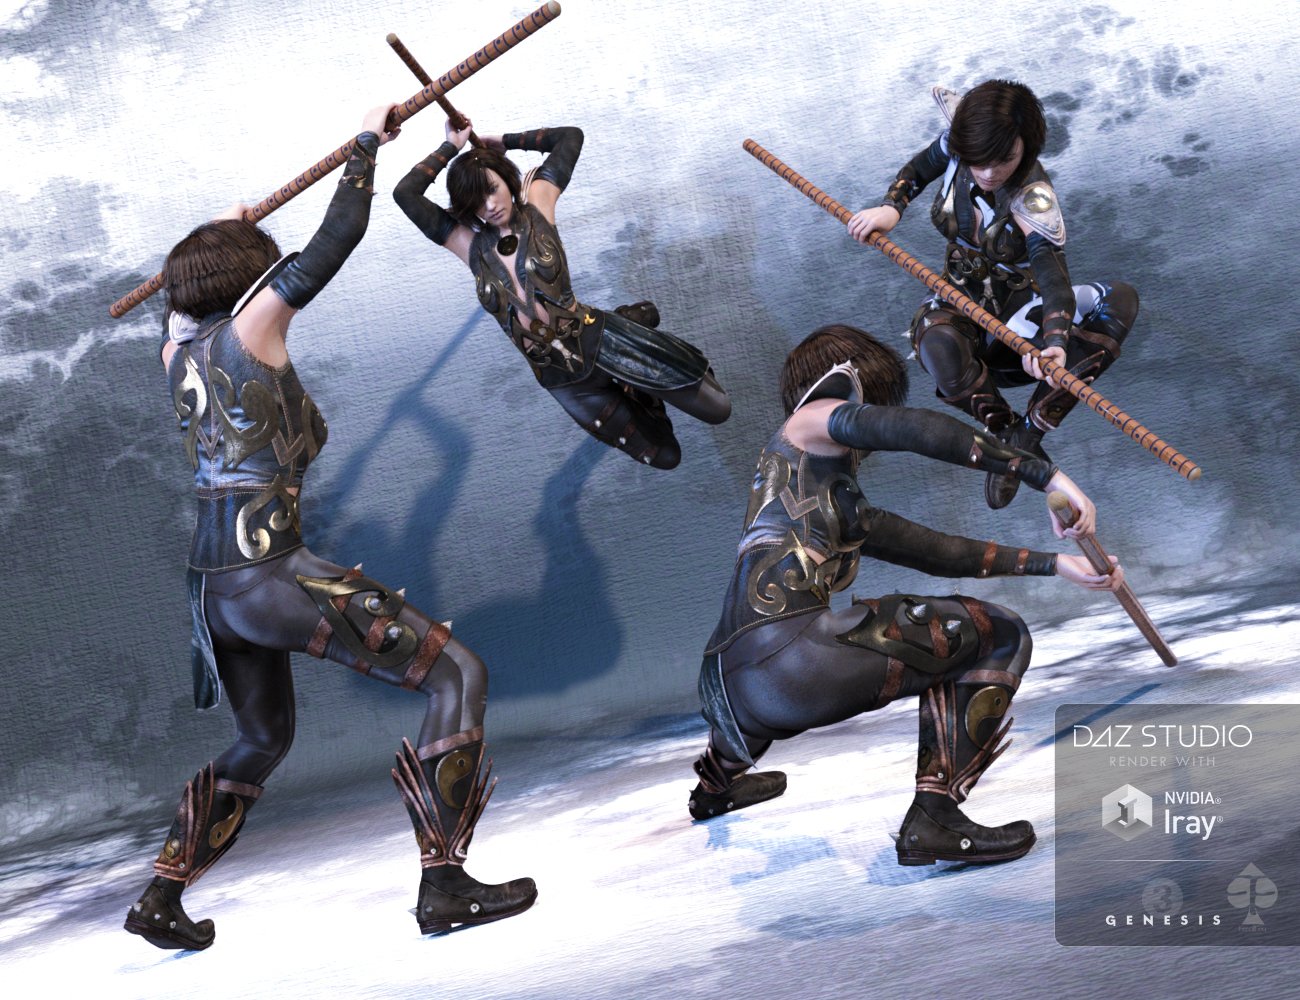 Fighting Series: Staff Arts for Genesis 3 Female by: FeralFey, 3D Models by Daz 3D